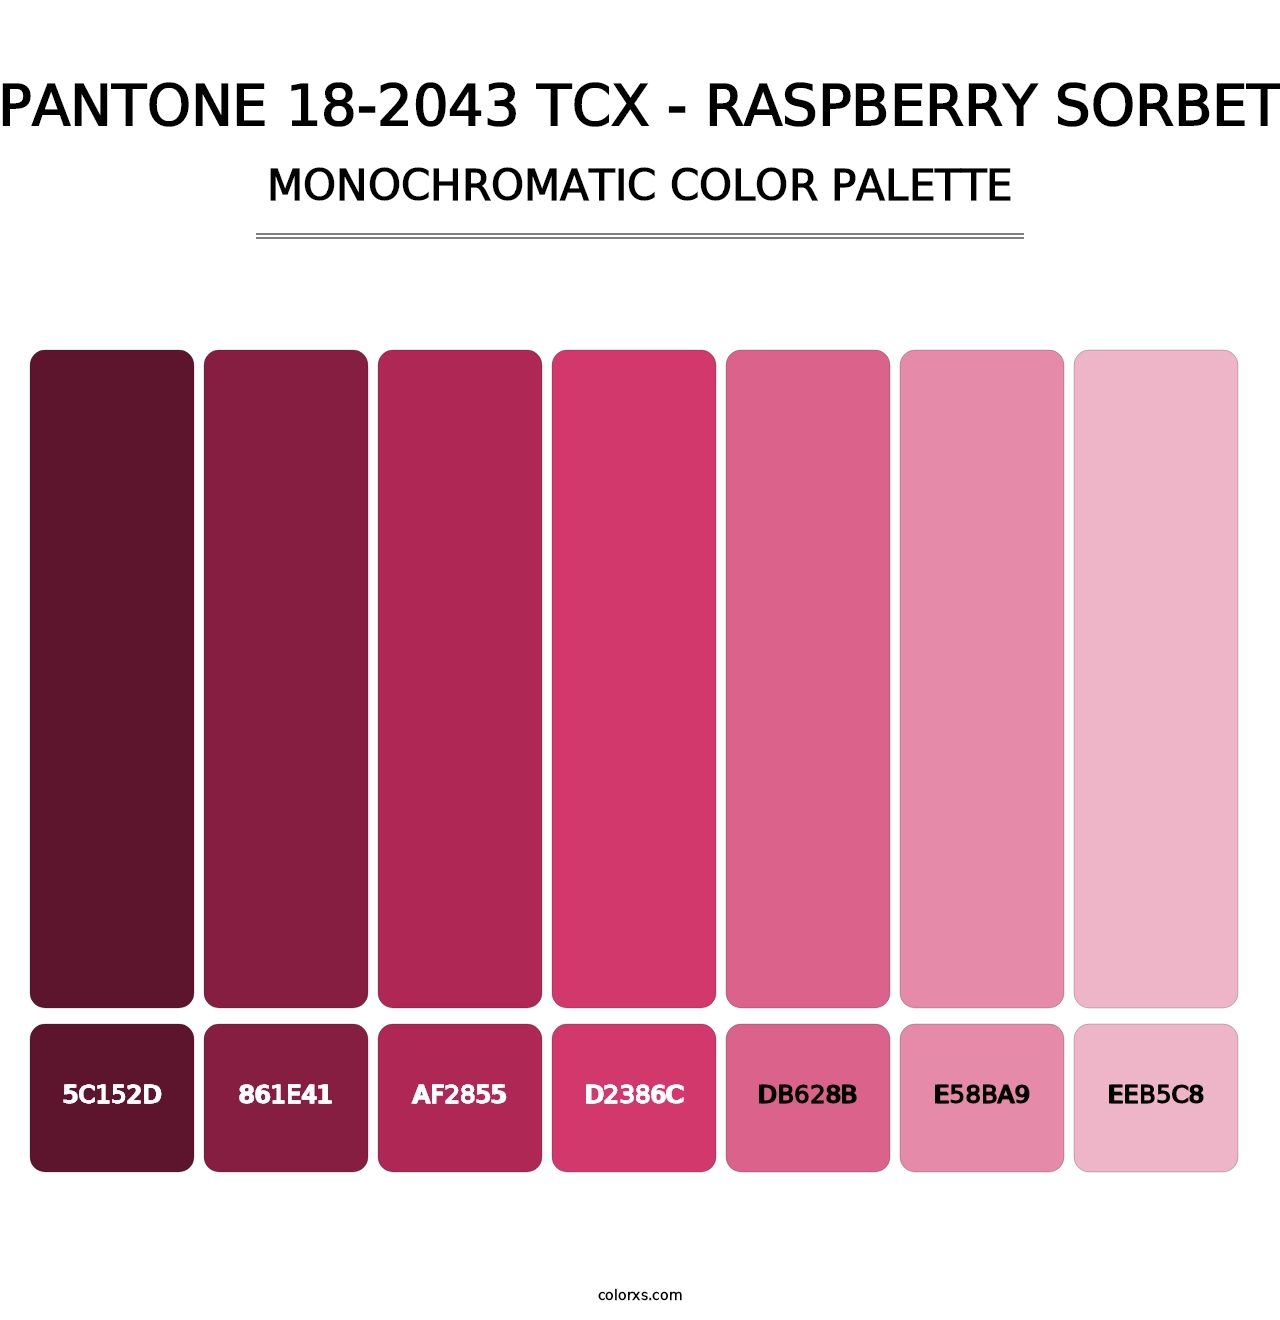 PANTONE 18-2043 TCX - Raspberry Sorbet - Monochromatic Color Palette